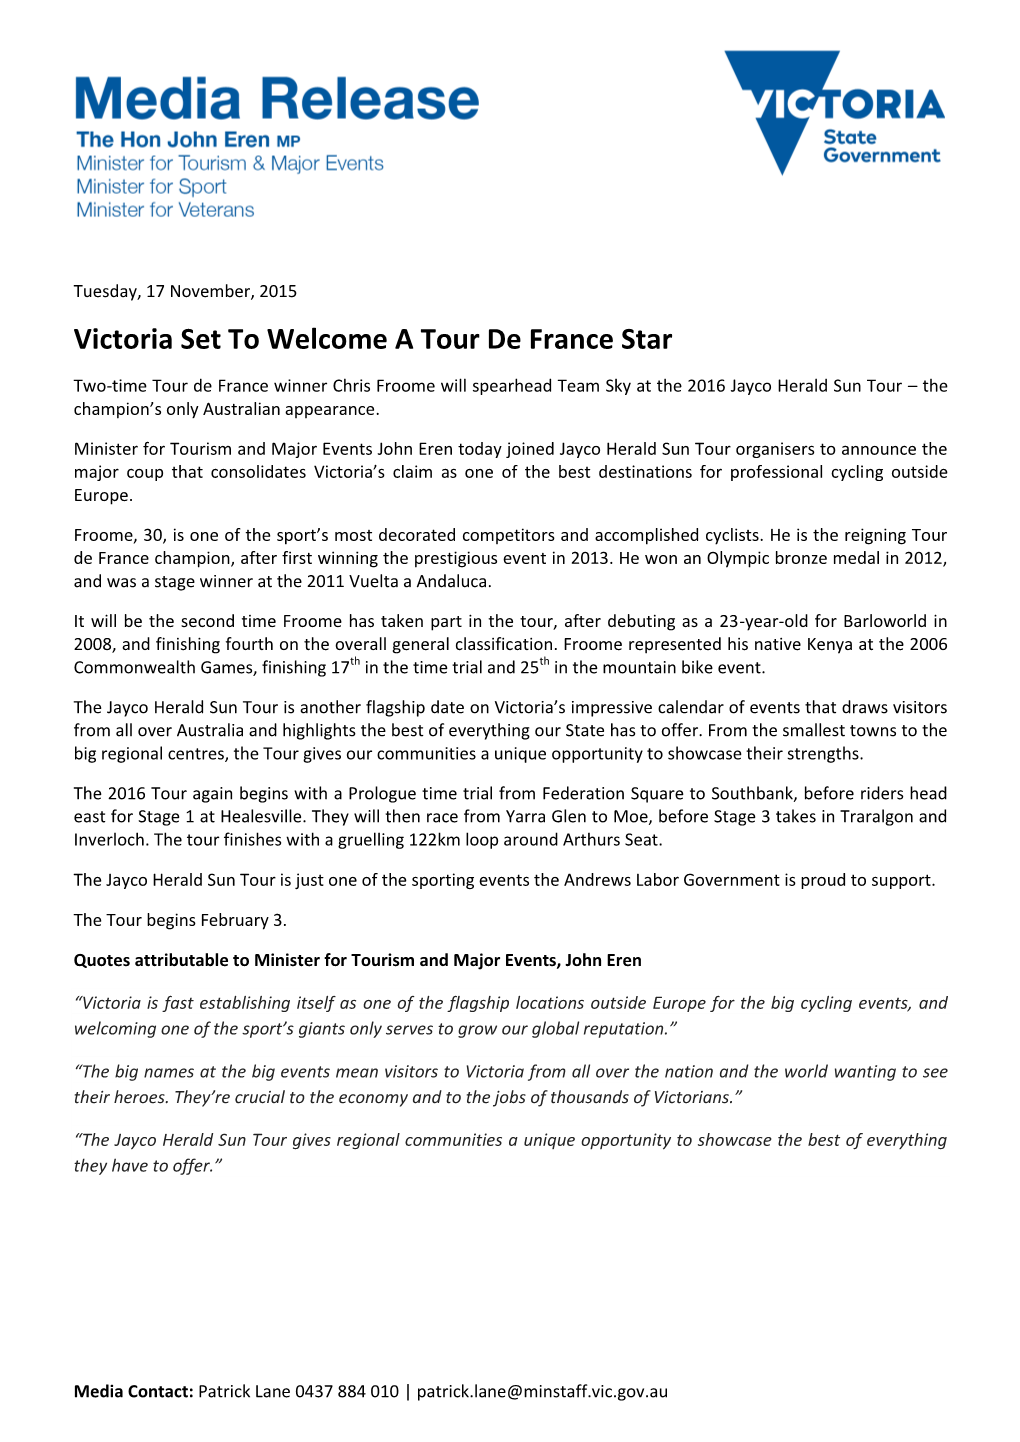 Victoria Set to Welcome a Tour De France Star